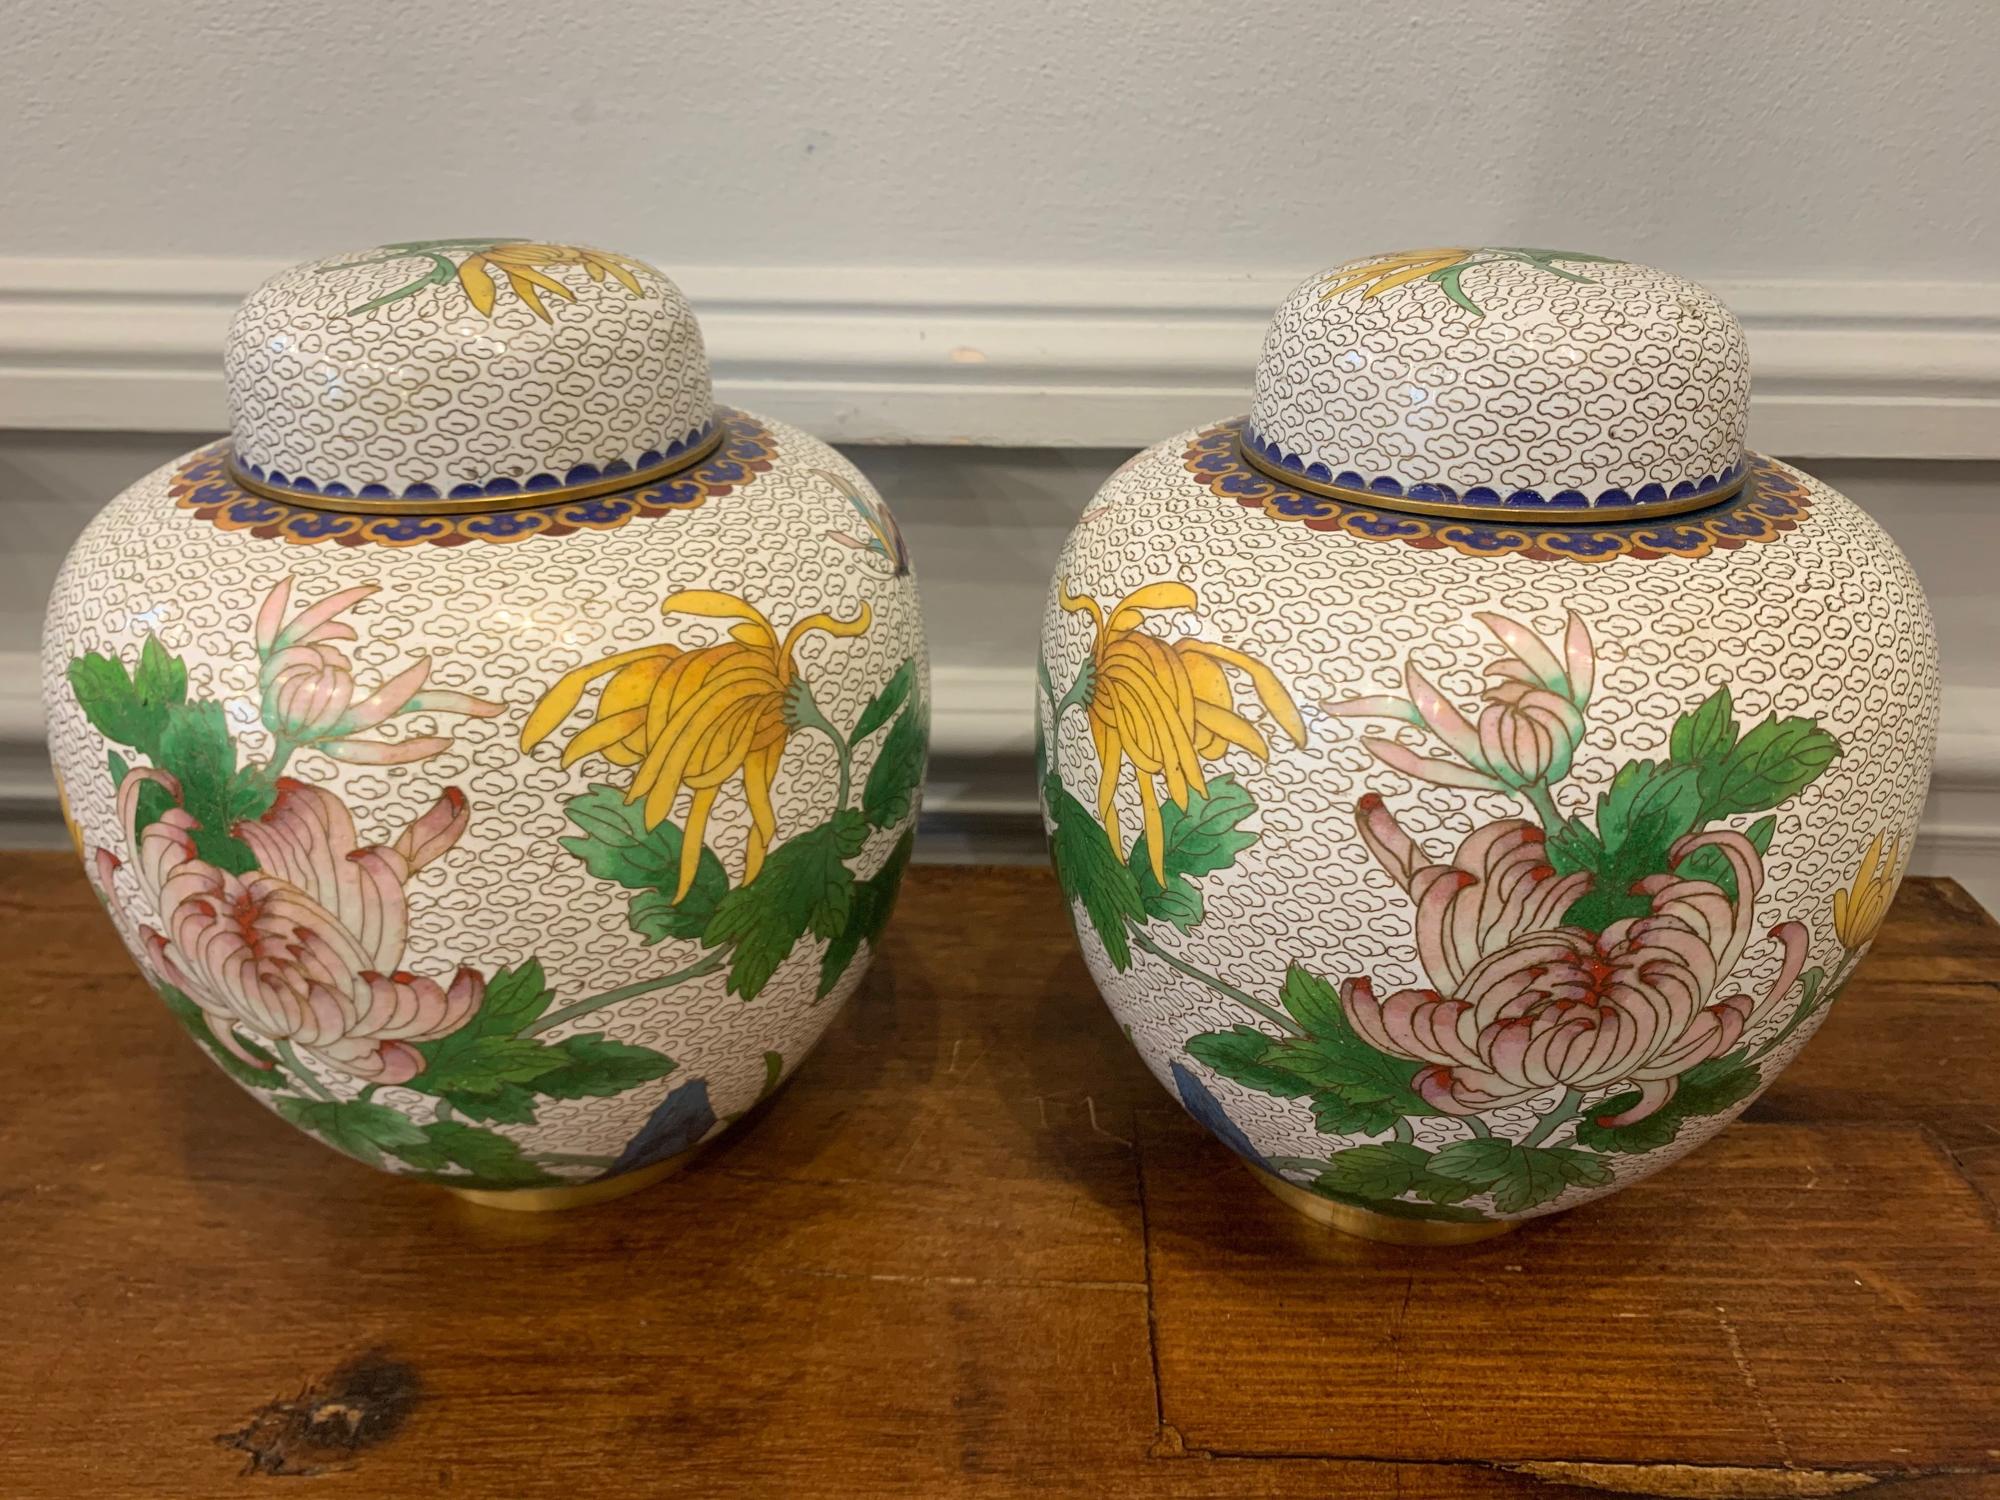 Pair of cloisonne ginger jars